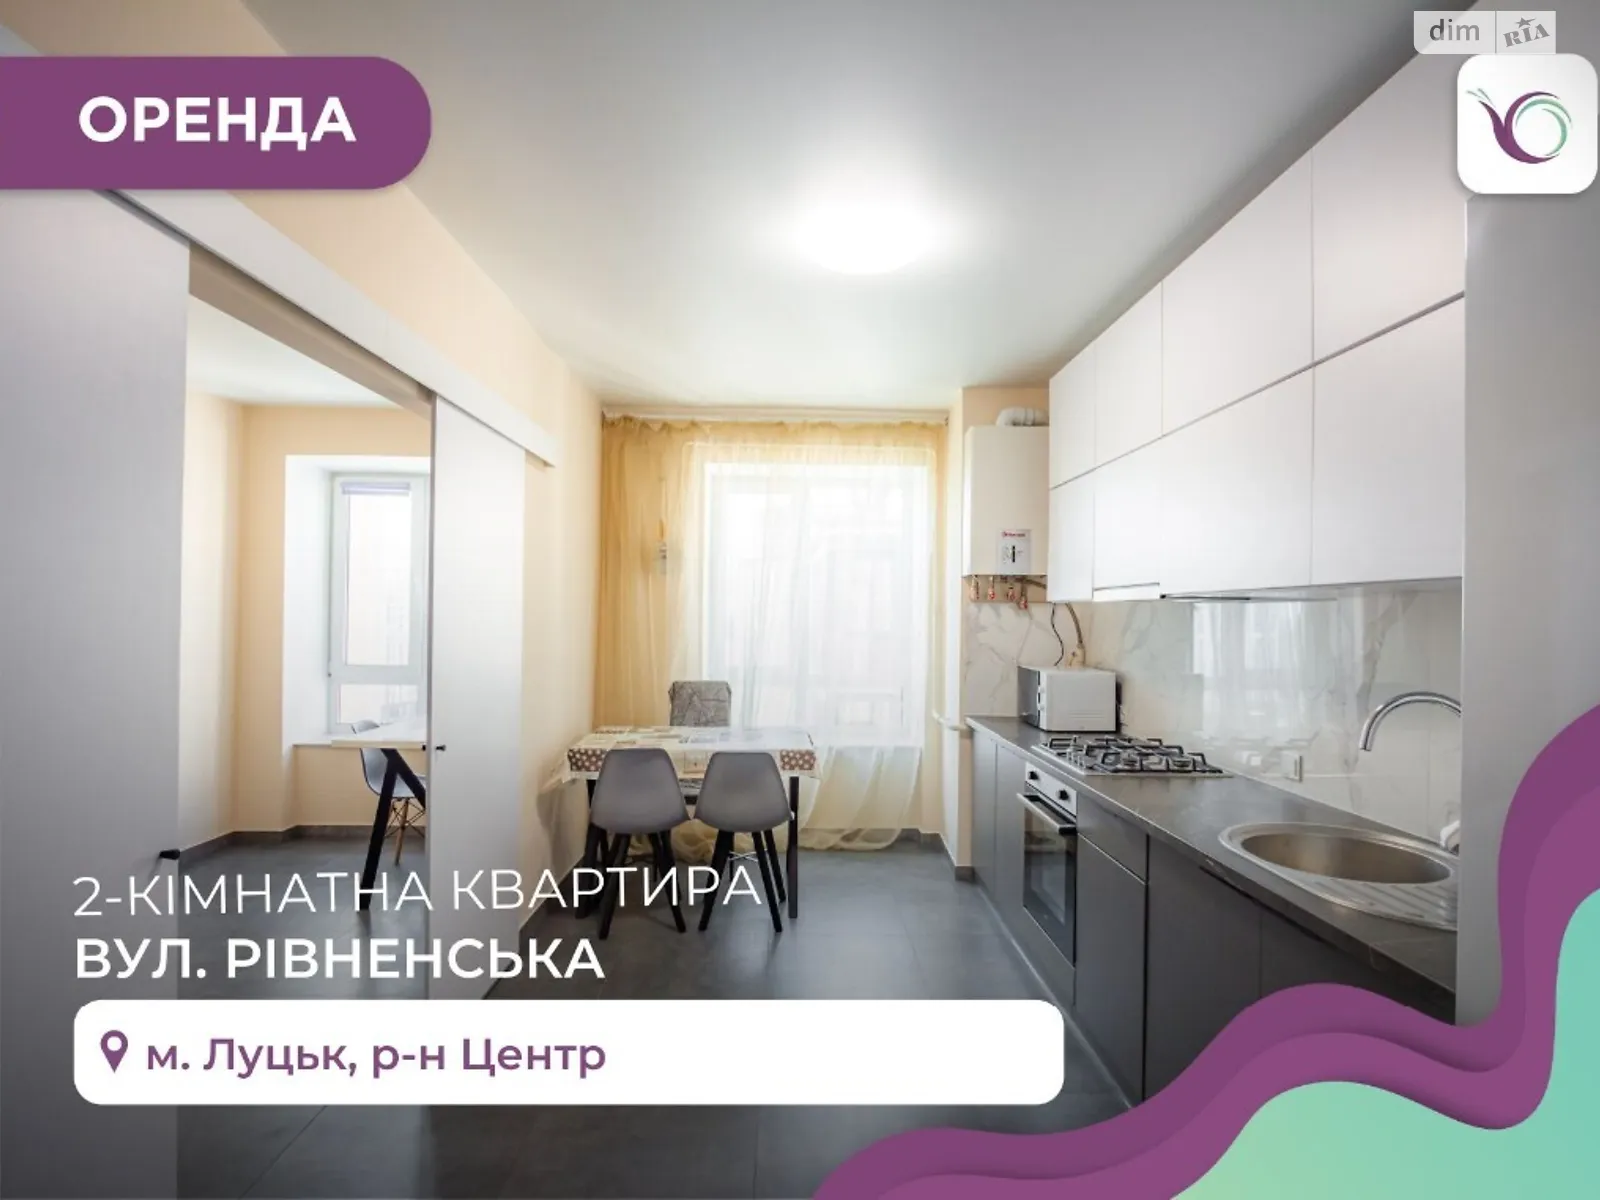 2-кімнатна квартира 60 кв. м у Луцьку, цена: 400 $